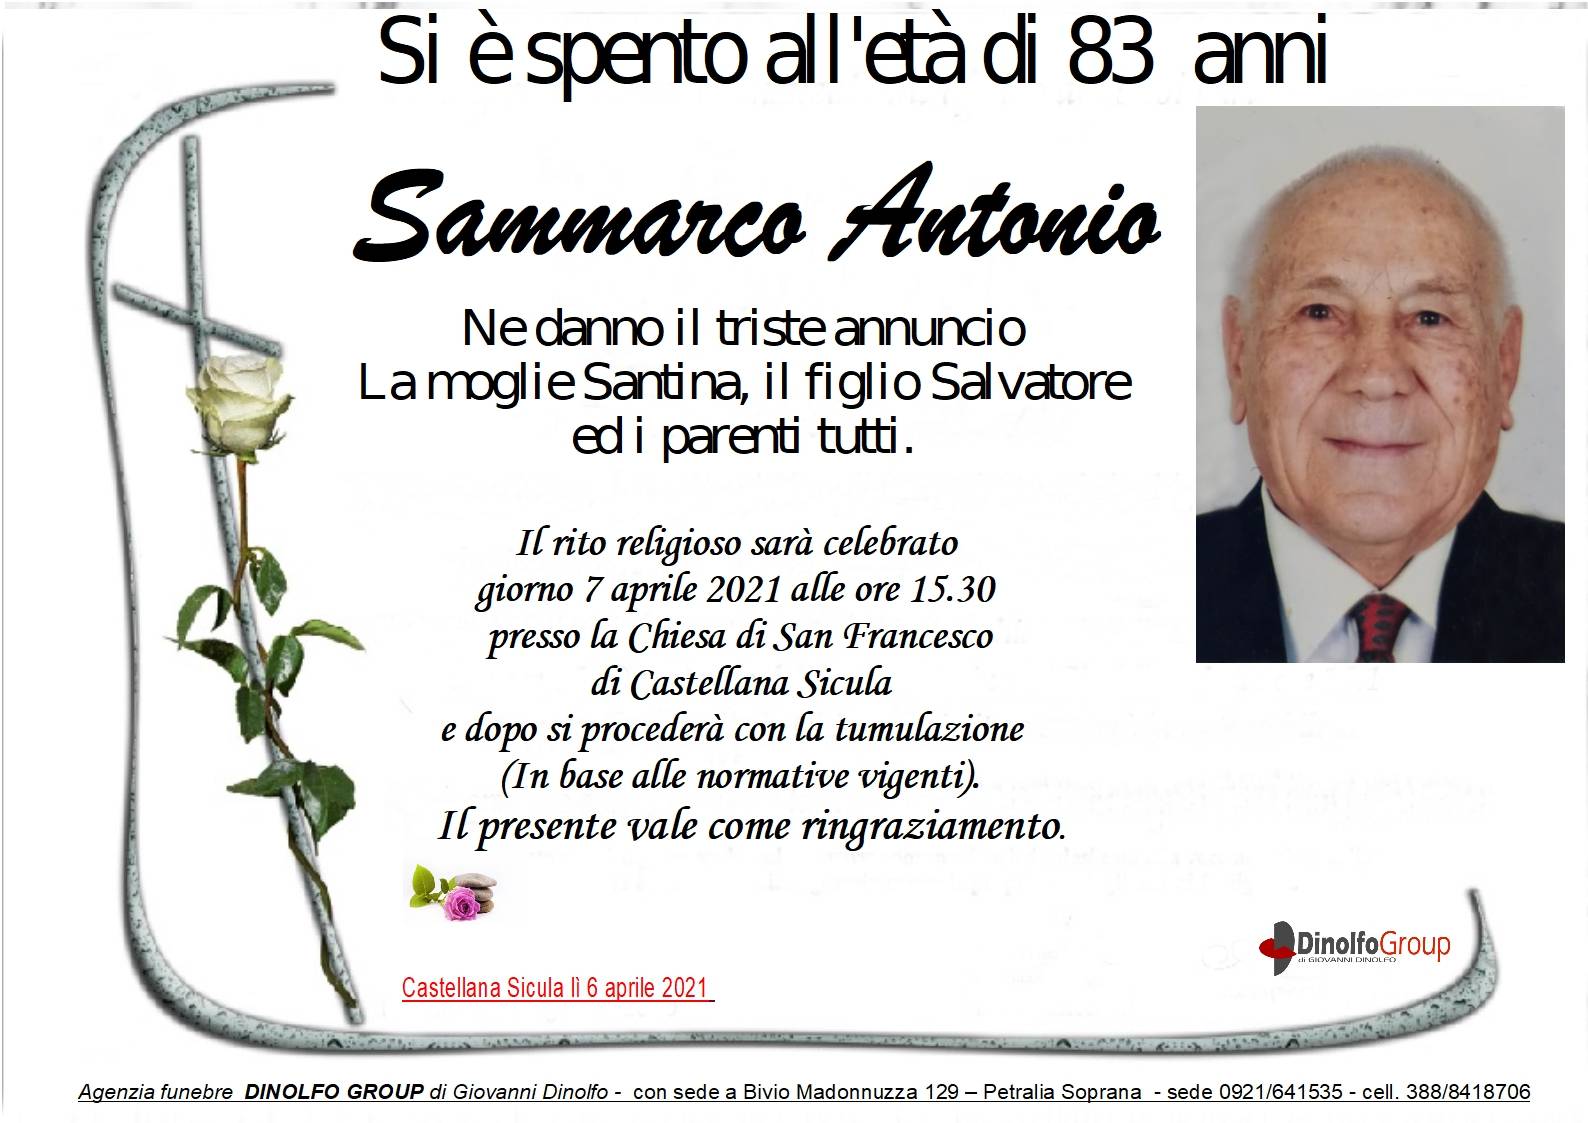 Antonio Sammarco